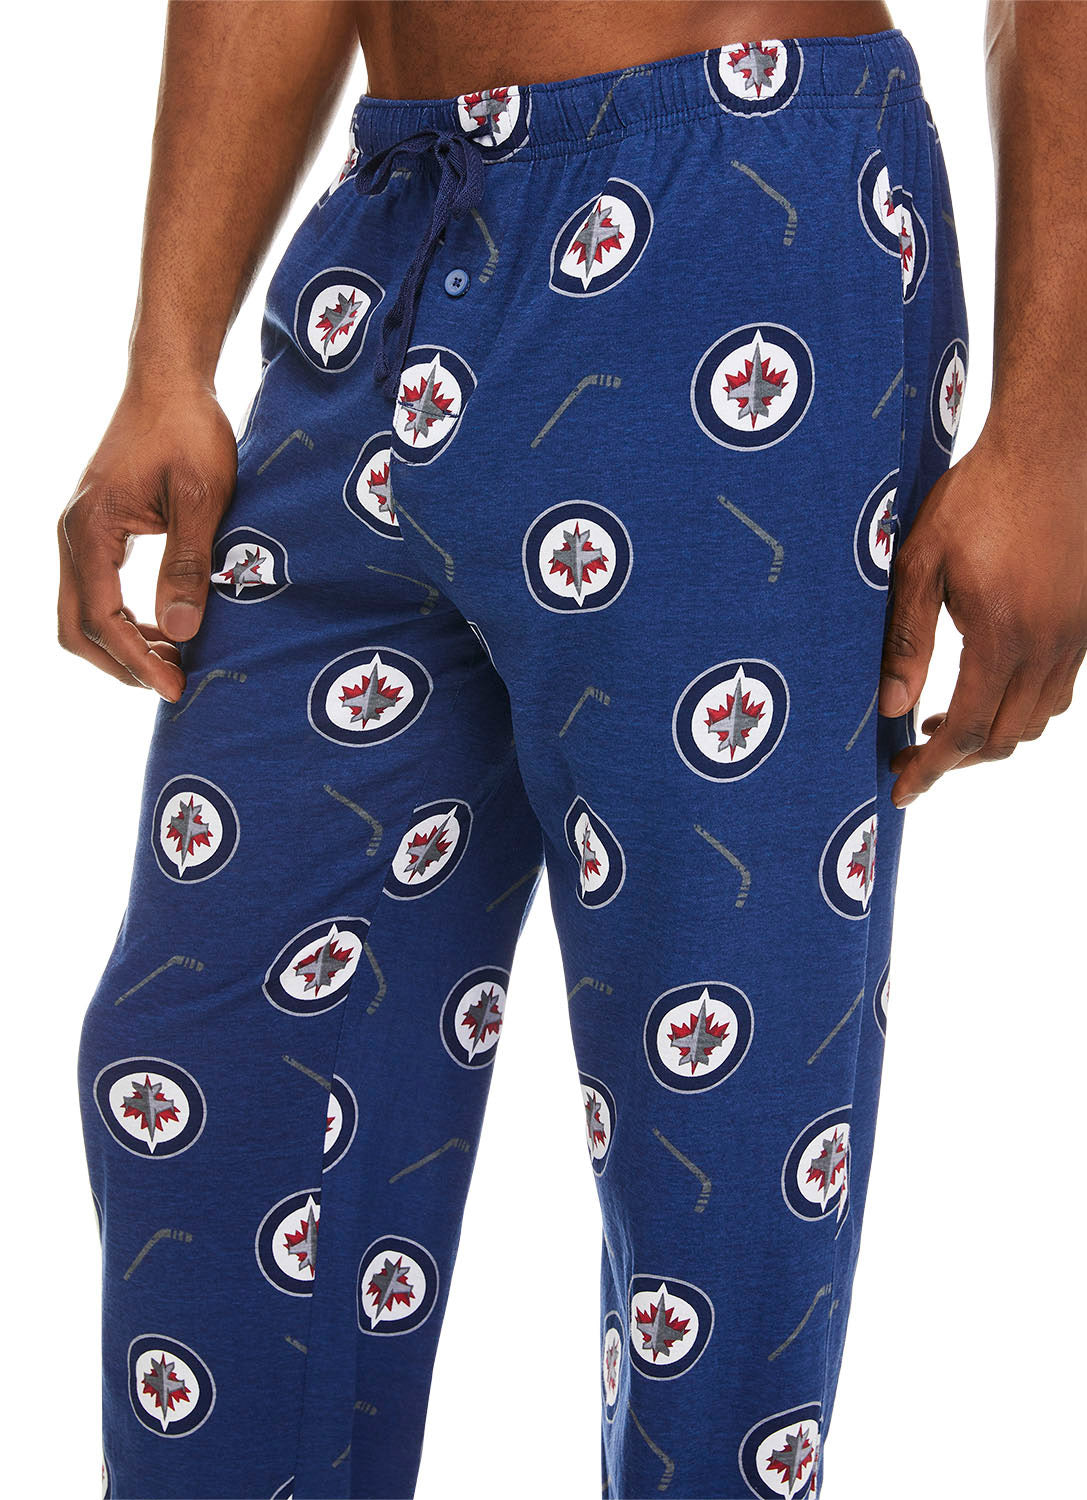 Detail Man wearing Winnipeg Jets Cotton Sleep Pant with logo and hockey stick print (Blue)